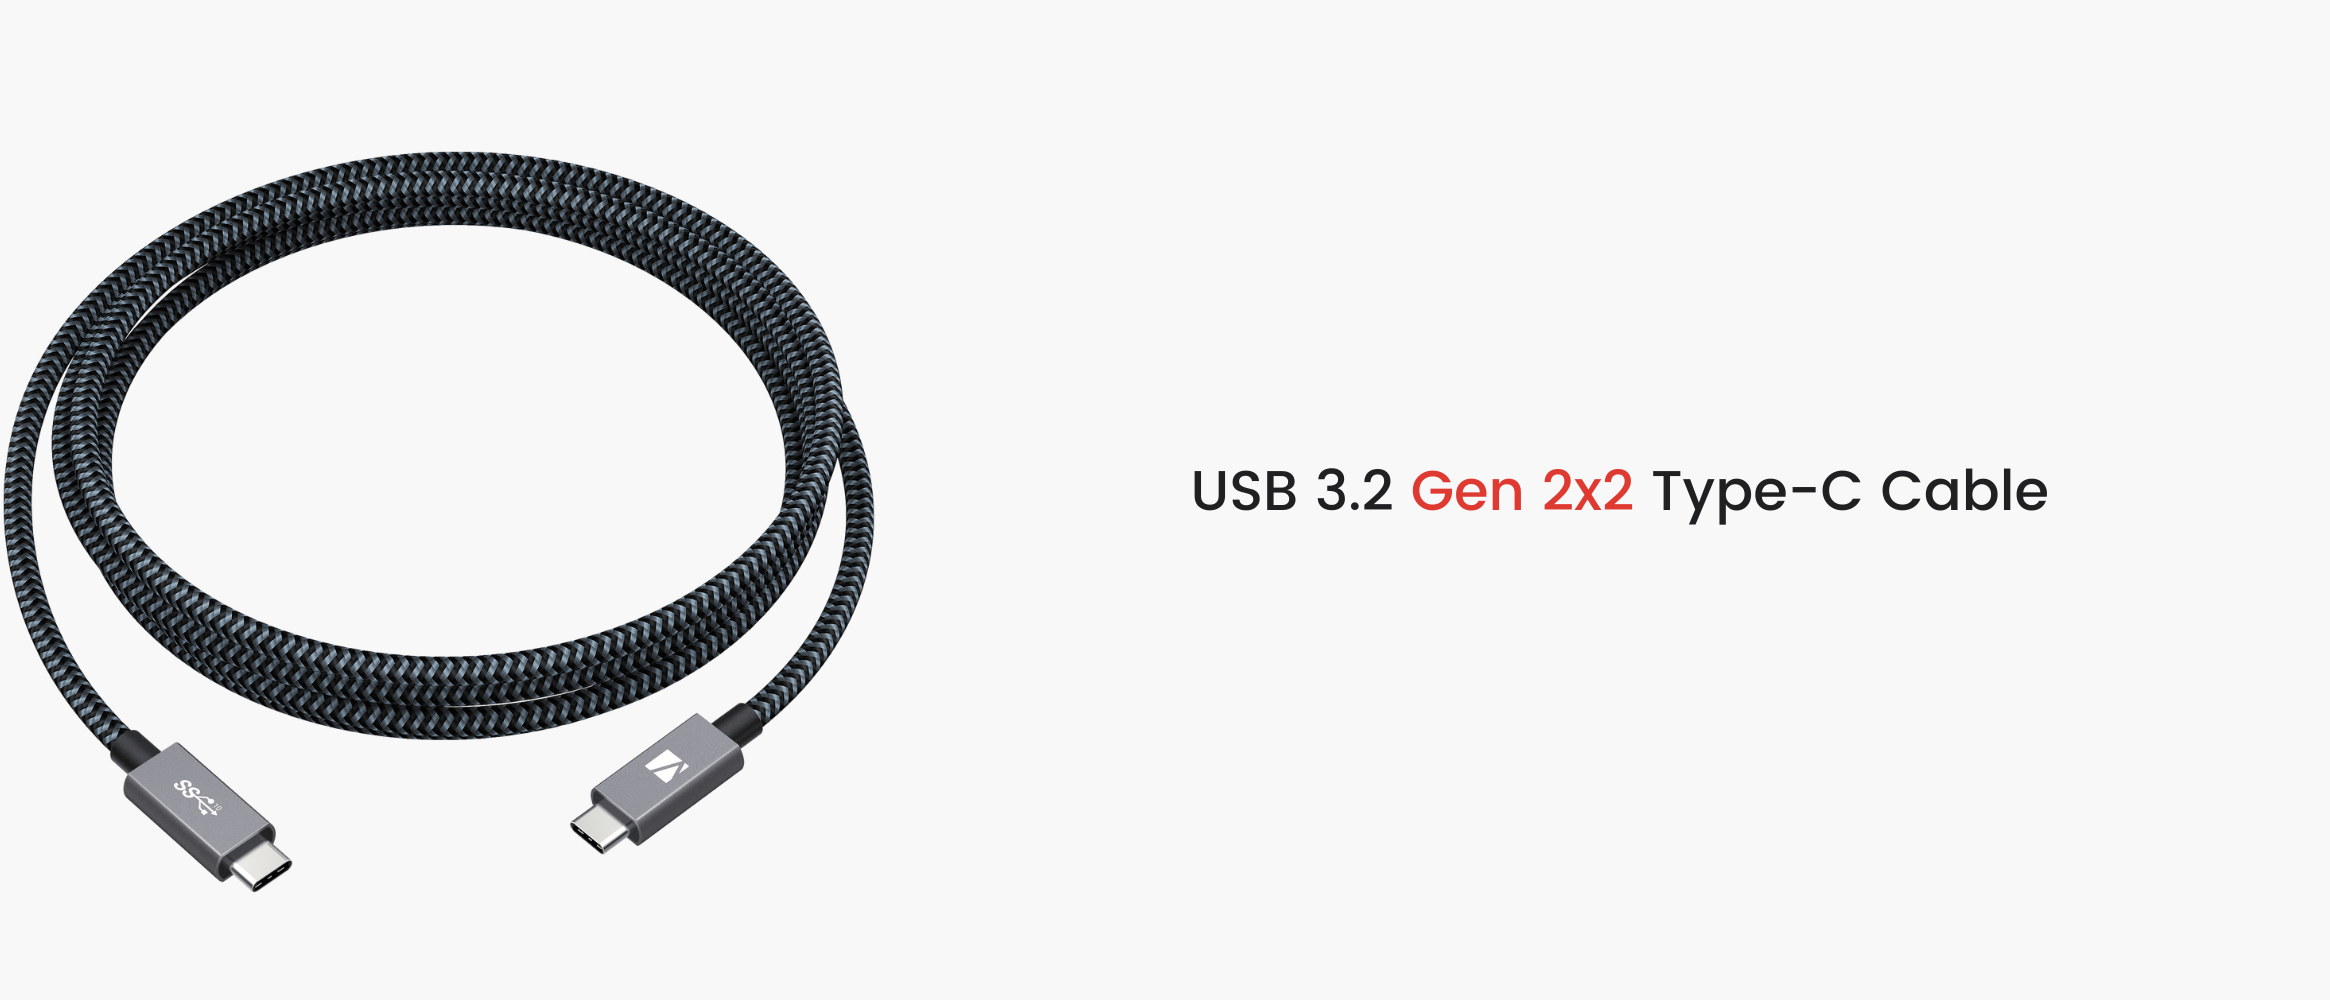 USB 3.2 Gen 2x2 Type-C Cable